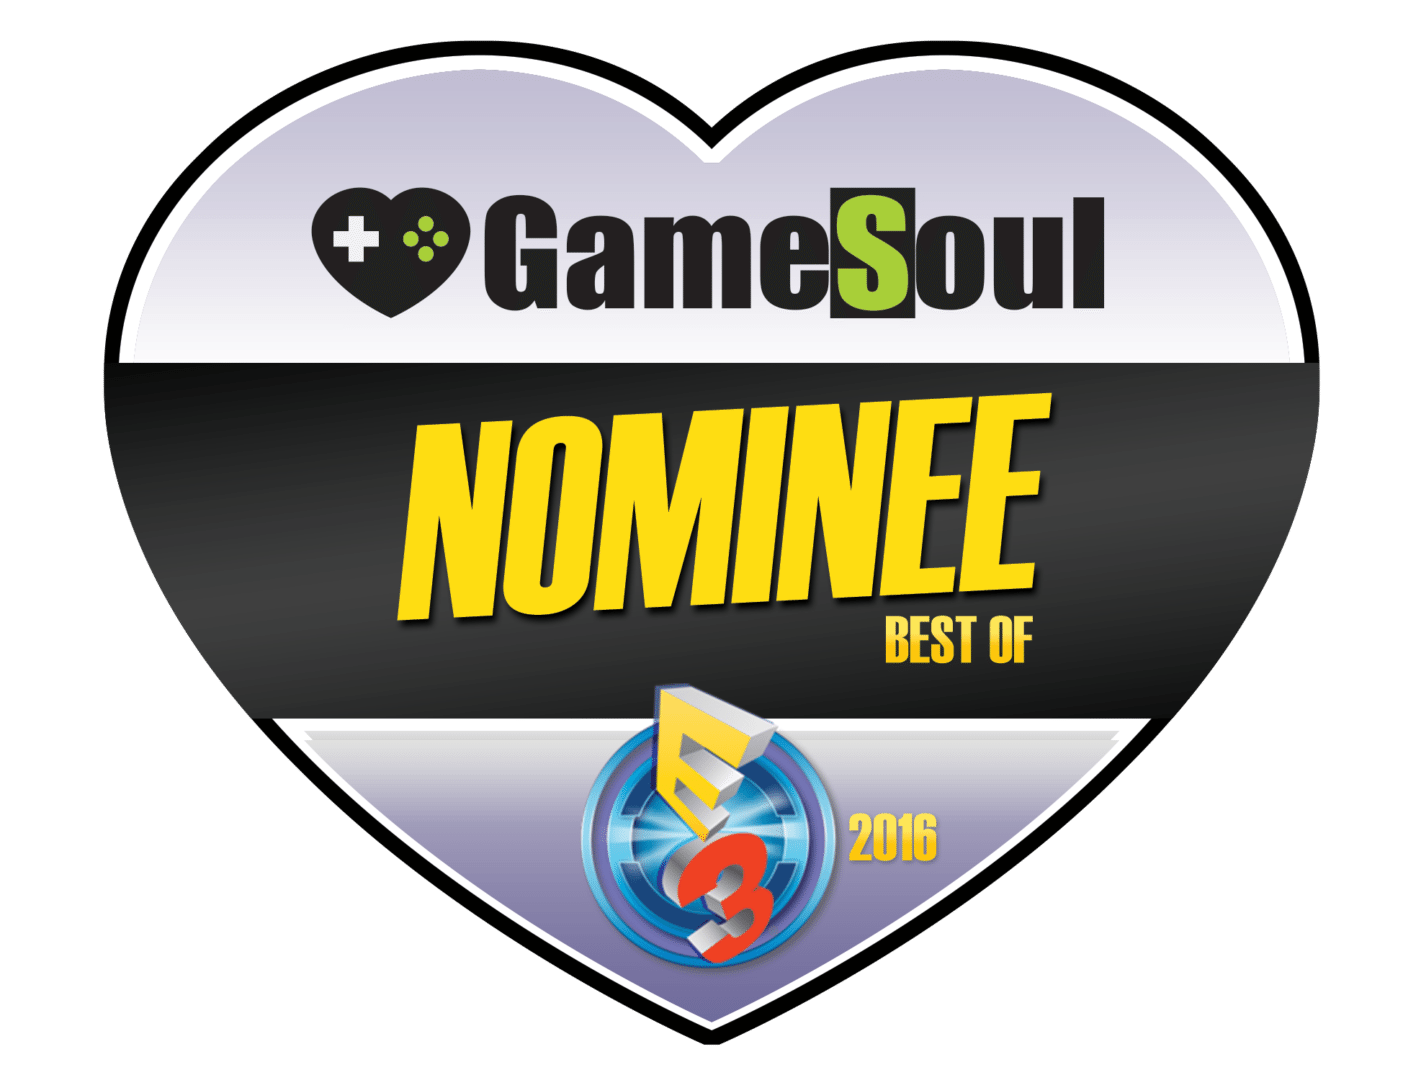 Best of E3 2016 - Nominee - GameSoul